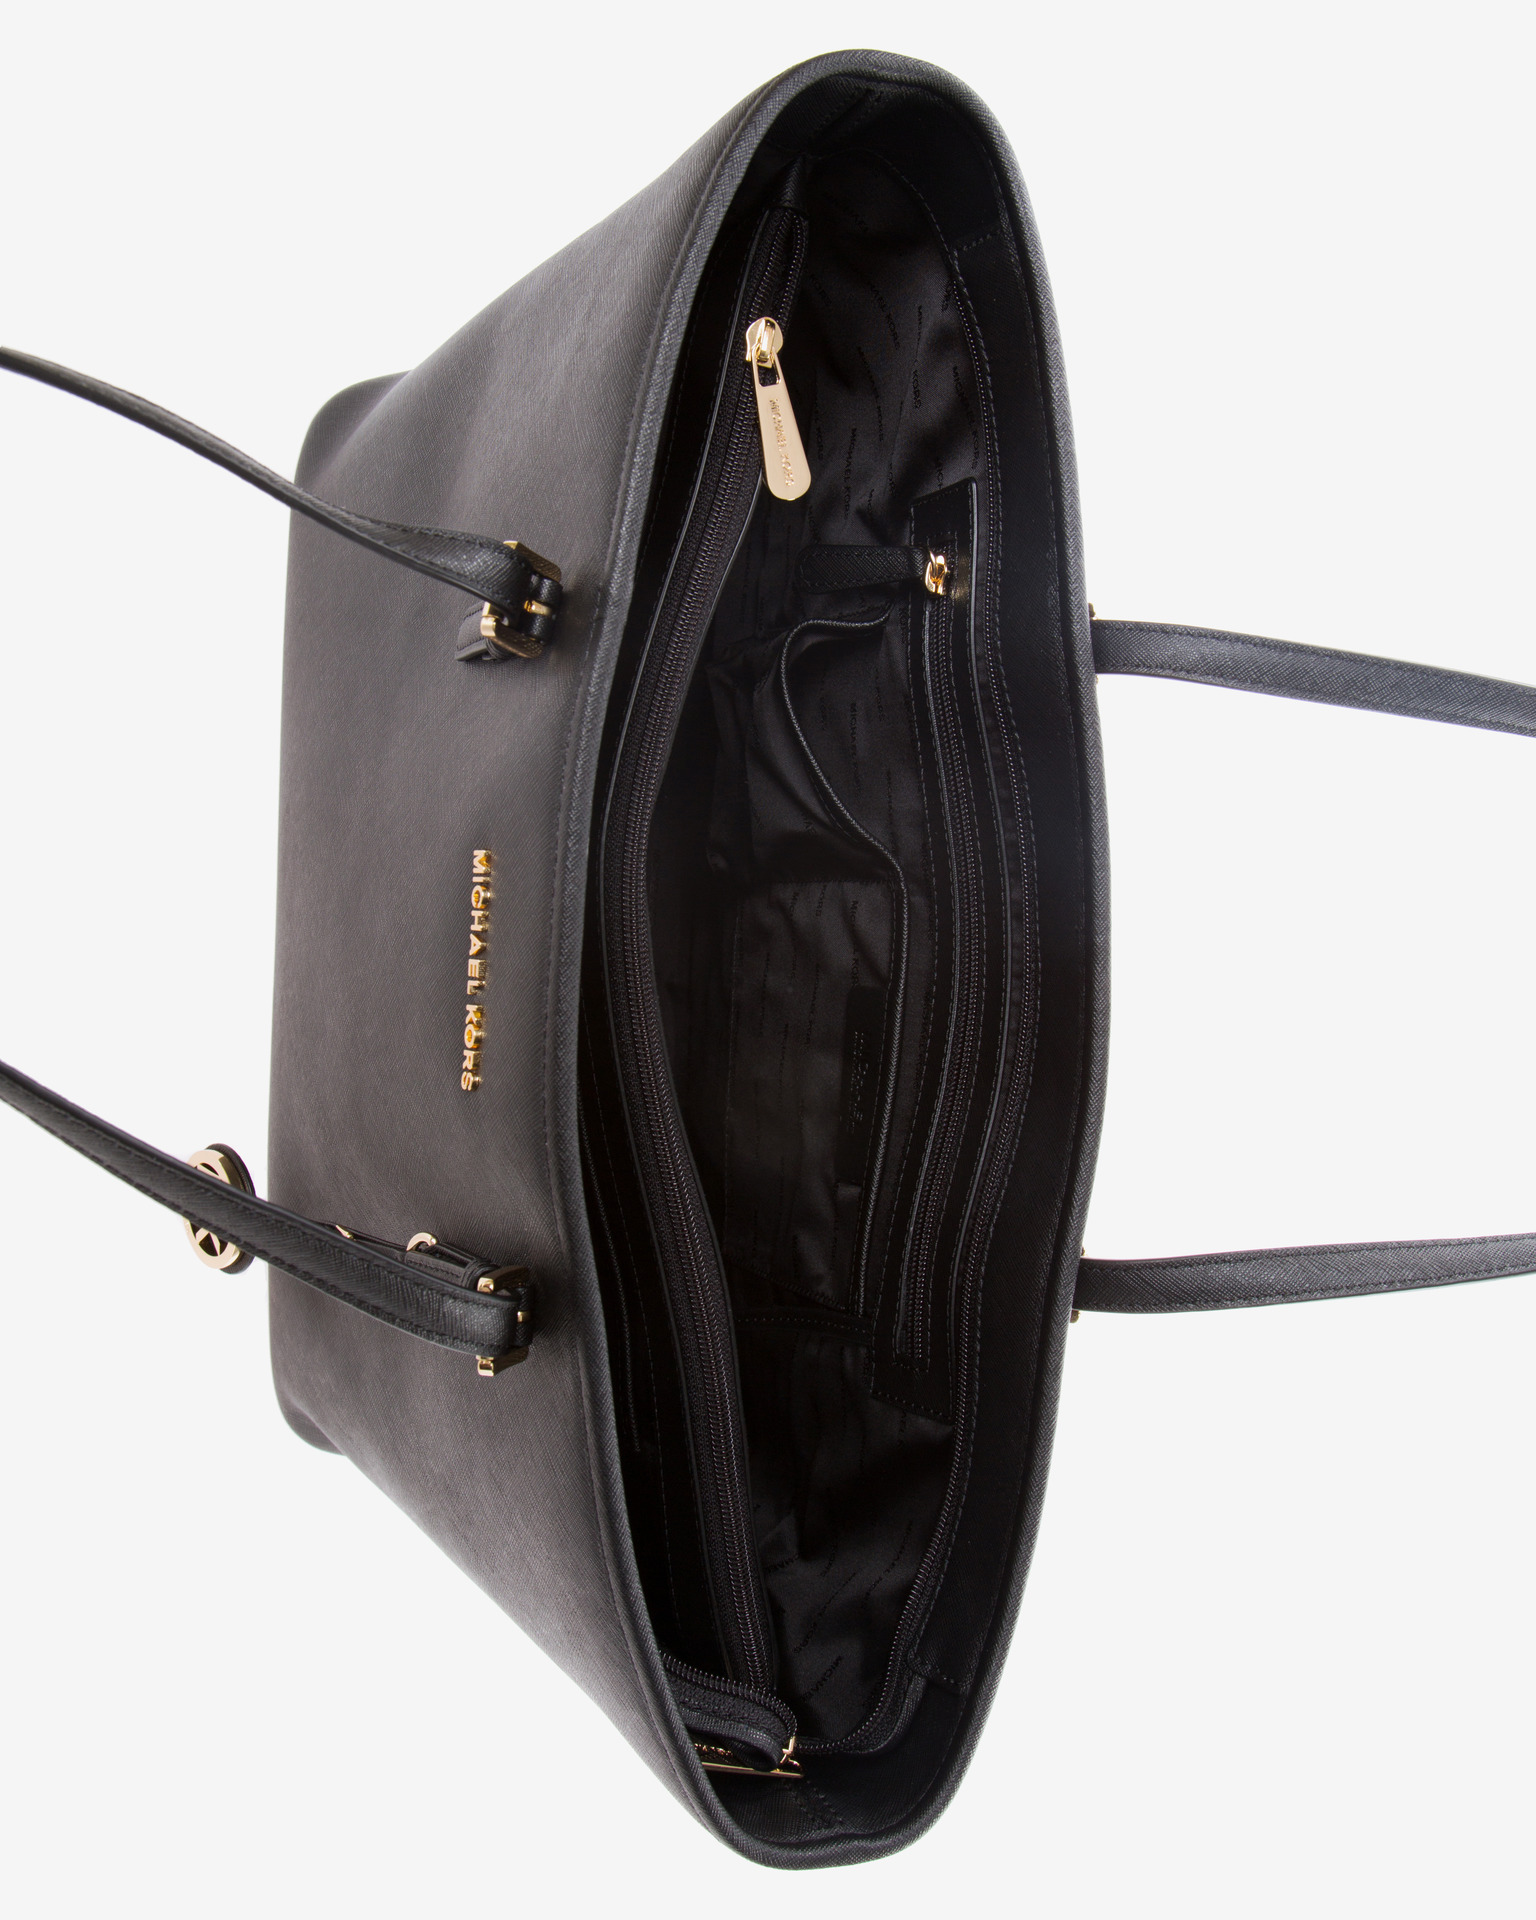 Michael Kors - Jet Set Travel Handbag 